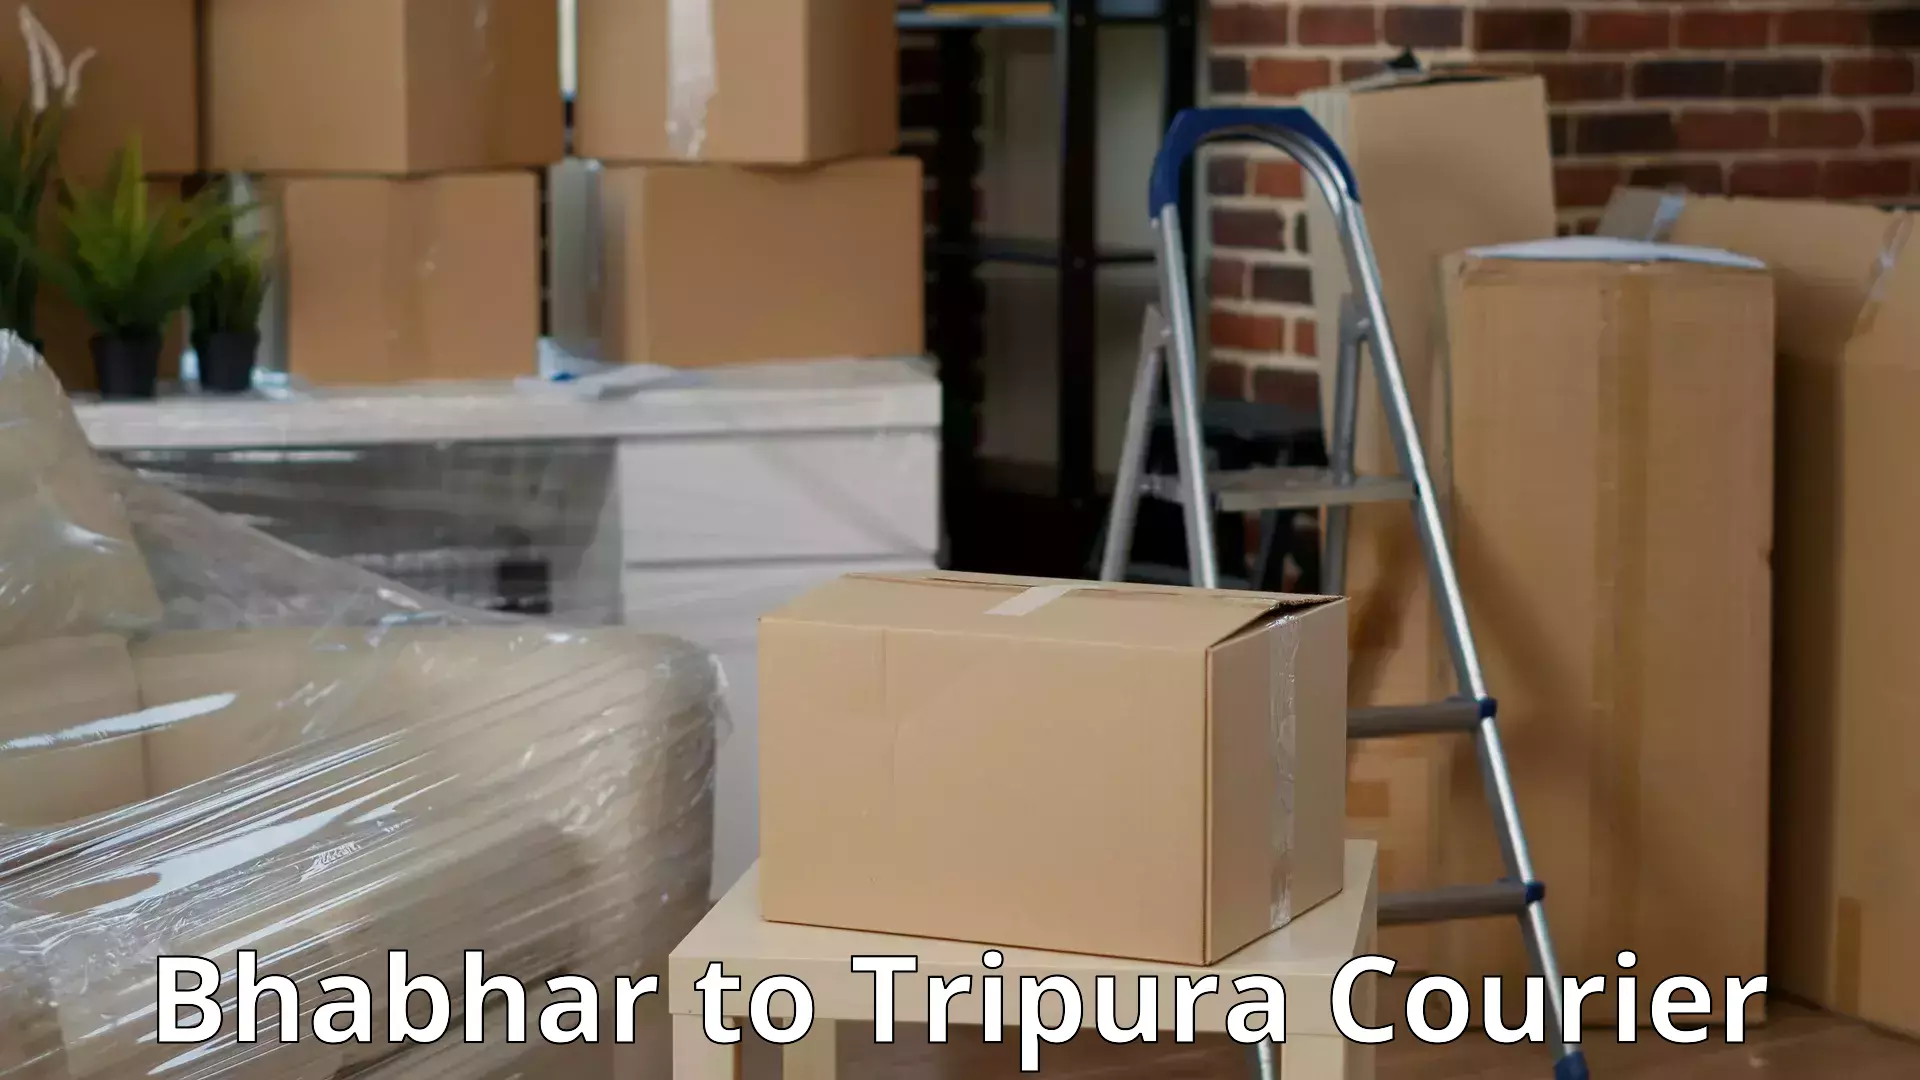 Trusted moving company Bhabhar to Tripura